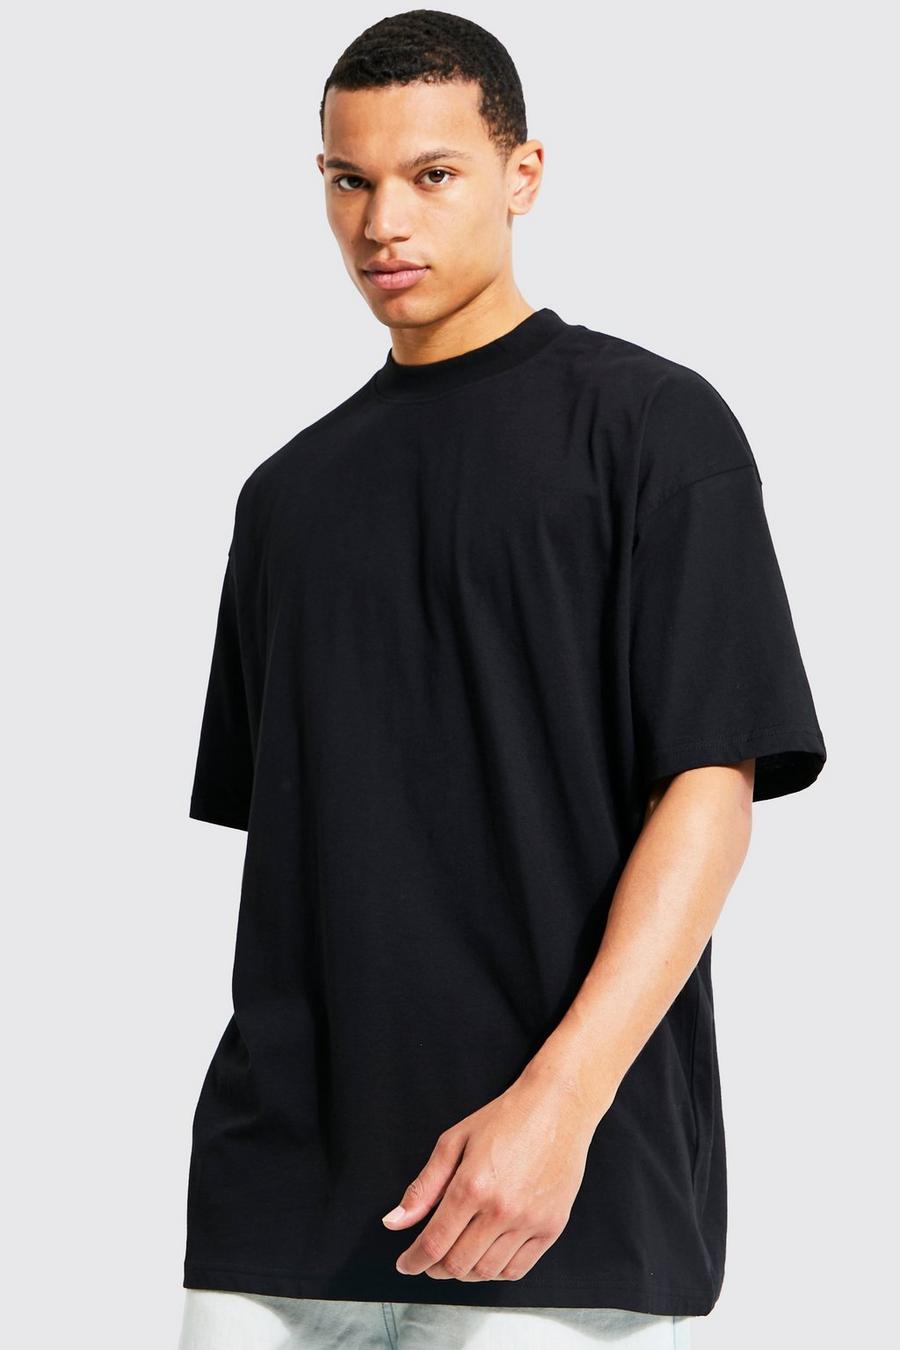 Camiseta Tall holgada básica con cuello extendido, Black